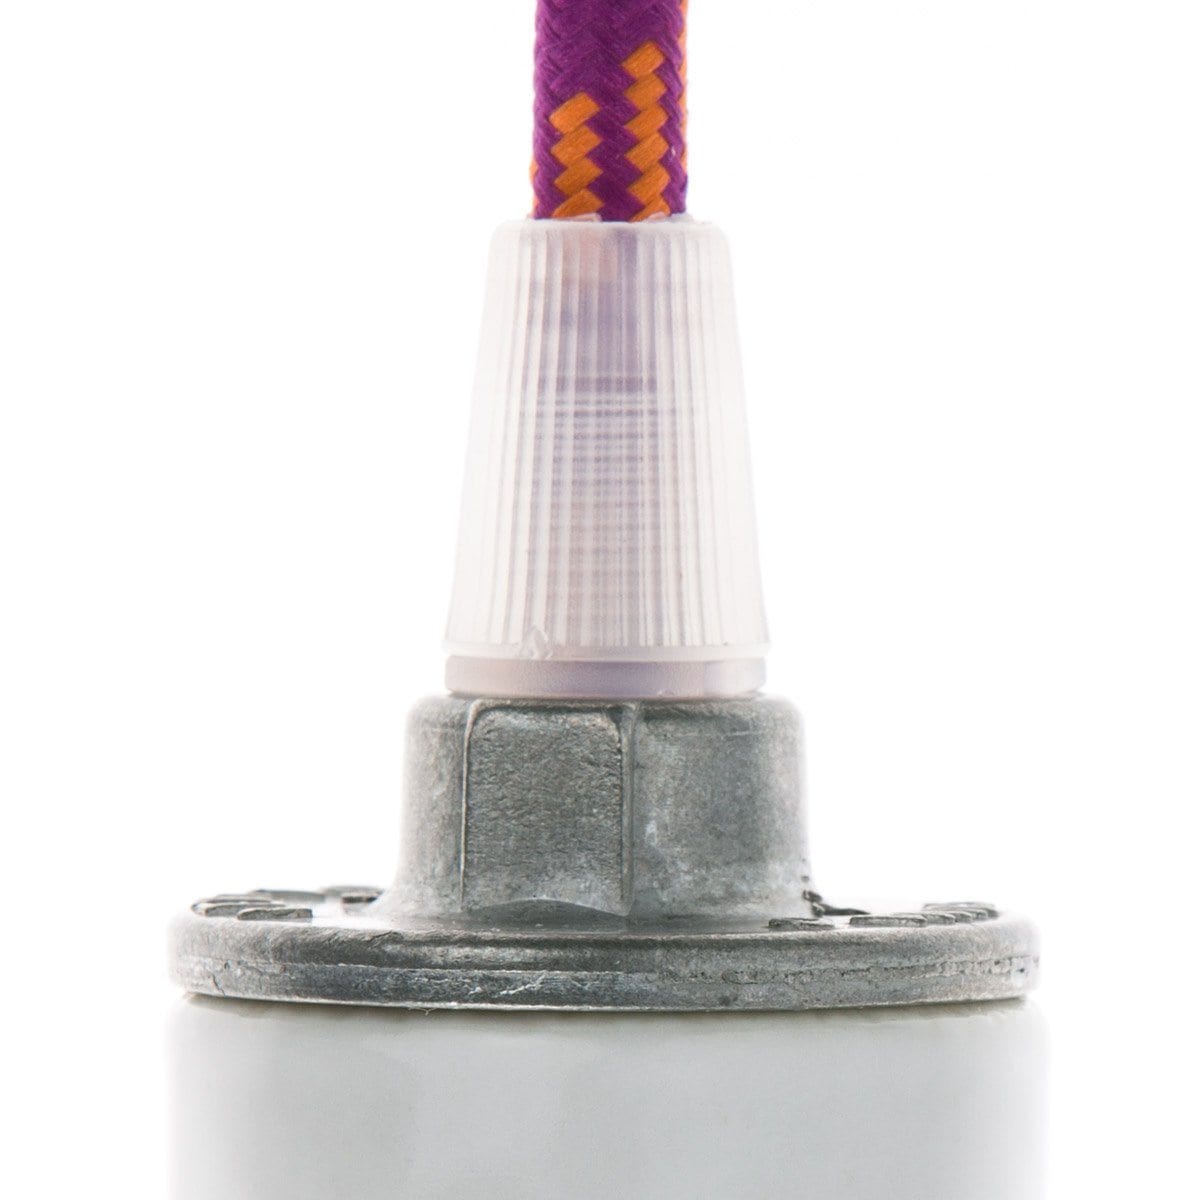 50pcs Plastic Strain Relief Cord Connectors Grip Cable Glands for  Hanging_Light